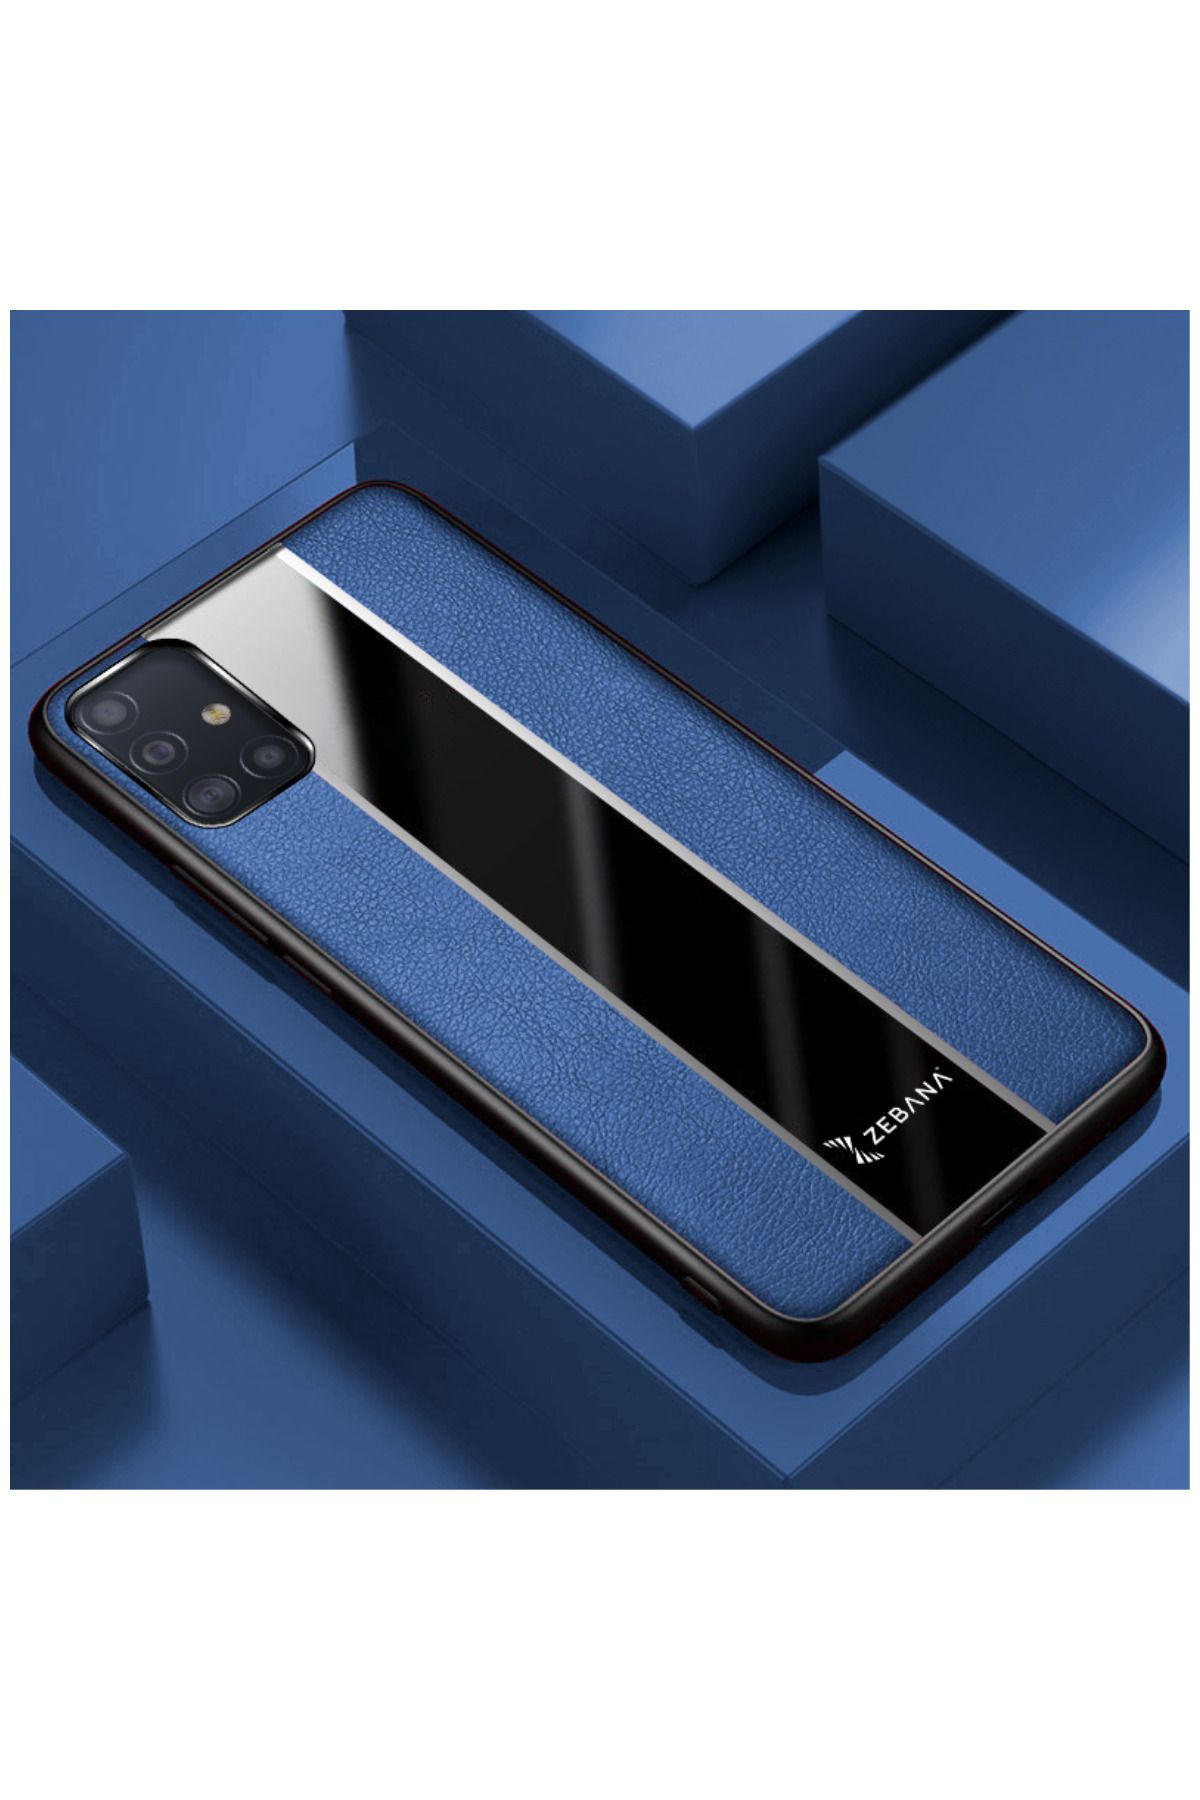 Dara Aksesuar Samsung Galaxy A51 Uyumlu Kılıf Zebana Premium Deri Kılıf Mavi